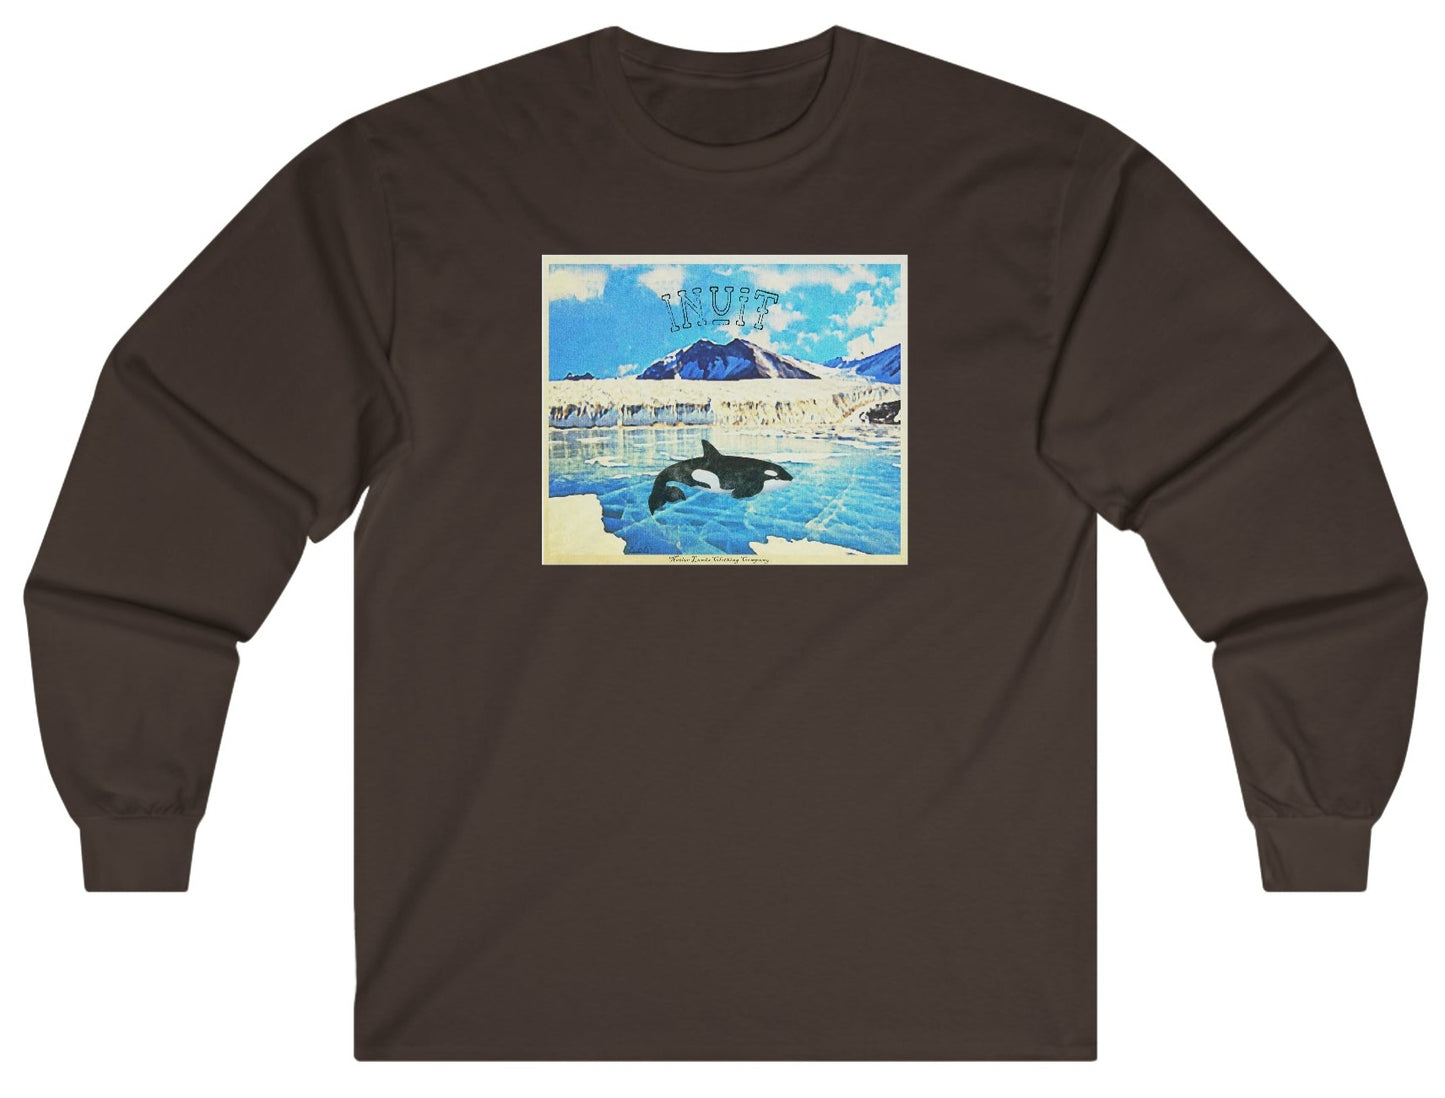 Camisa Manga Larga Tribu Inuit Orca Algodón Nativo Americano